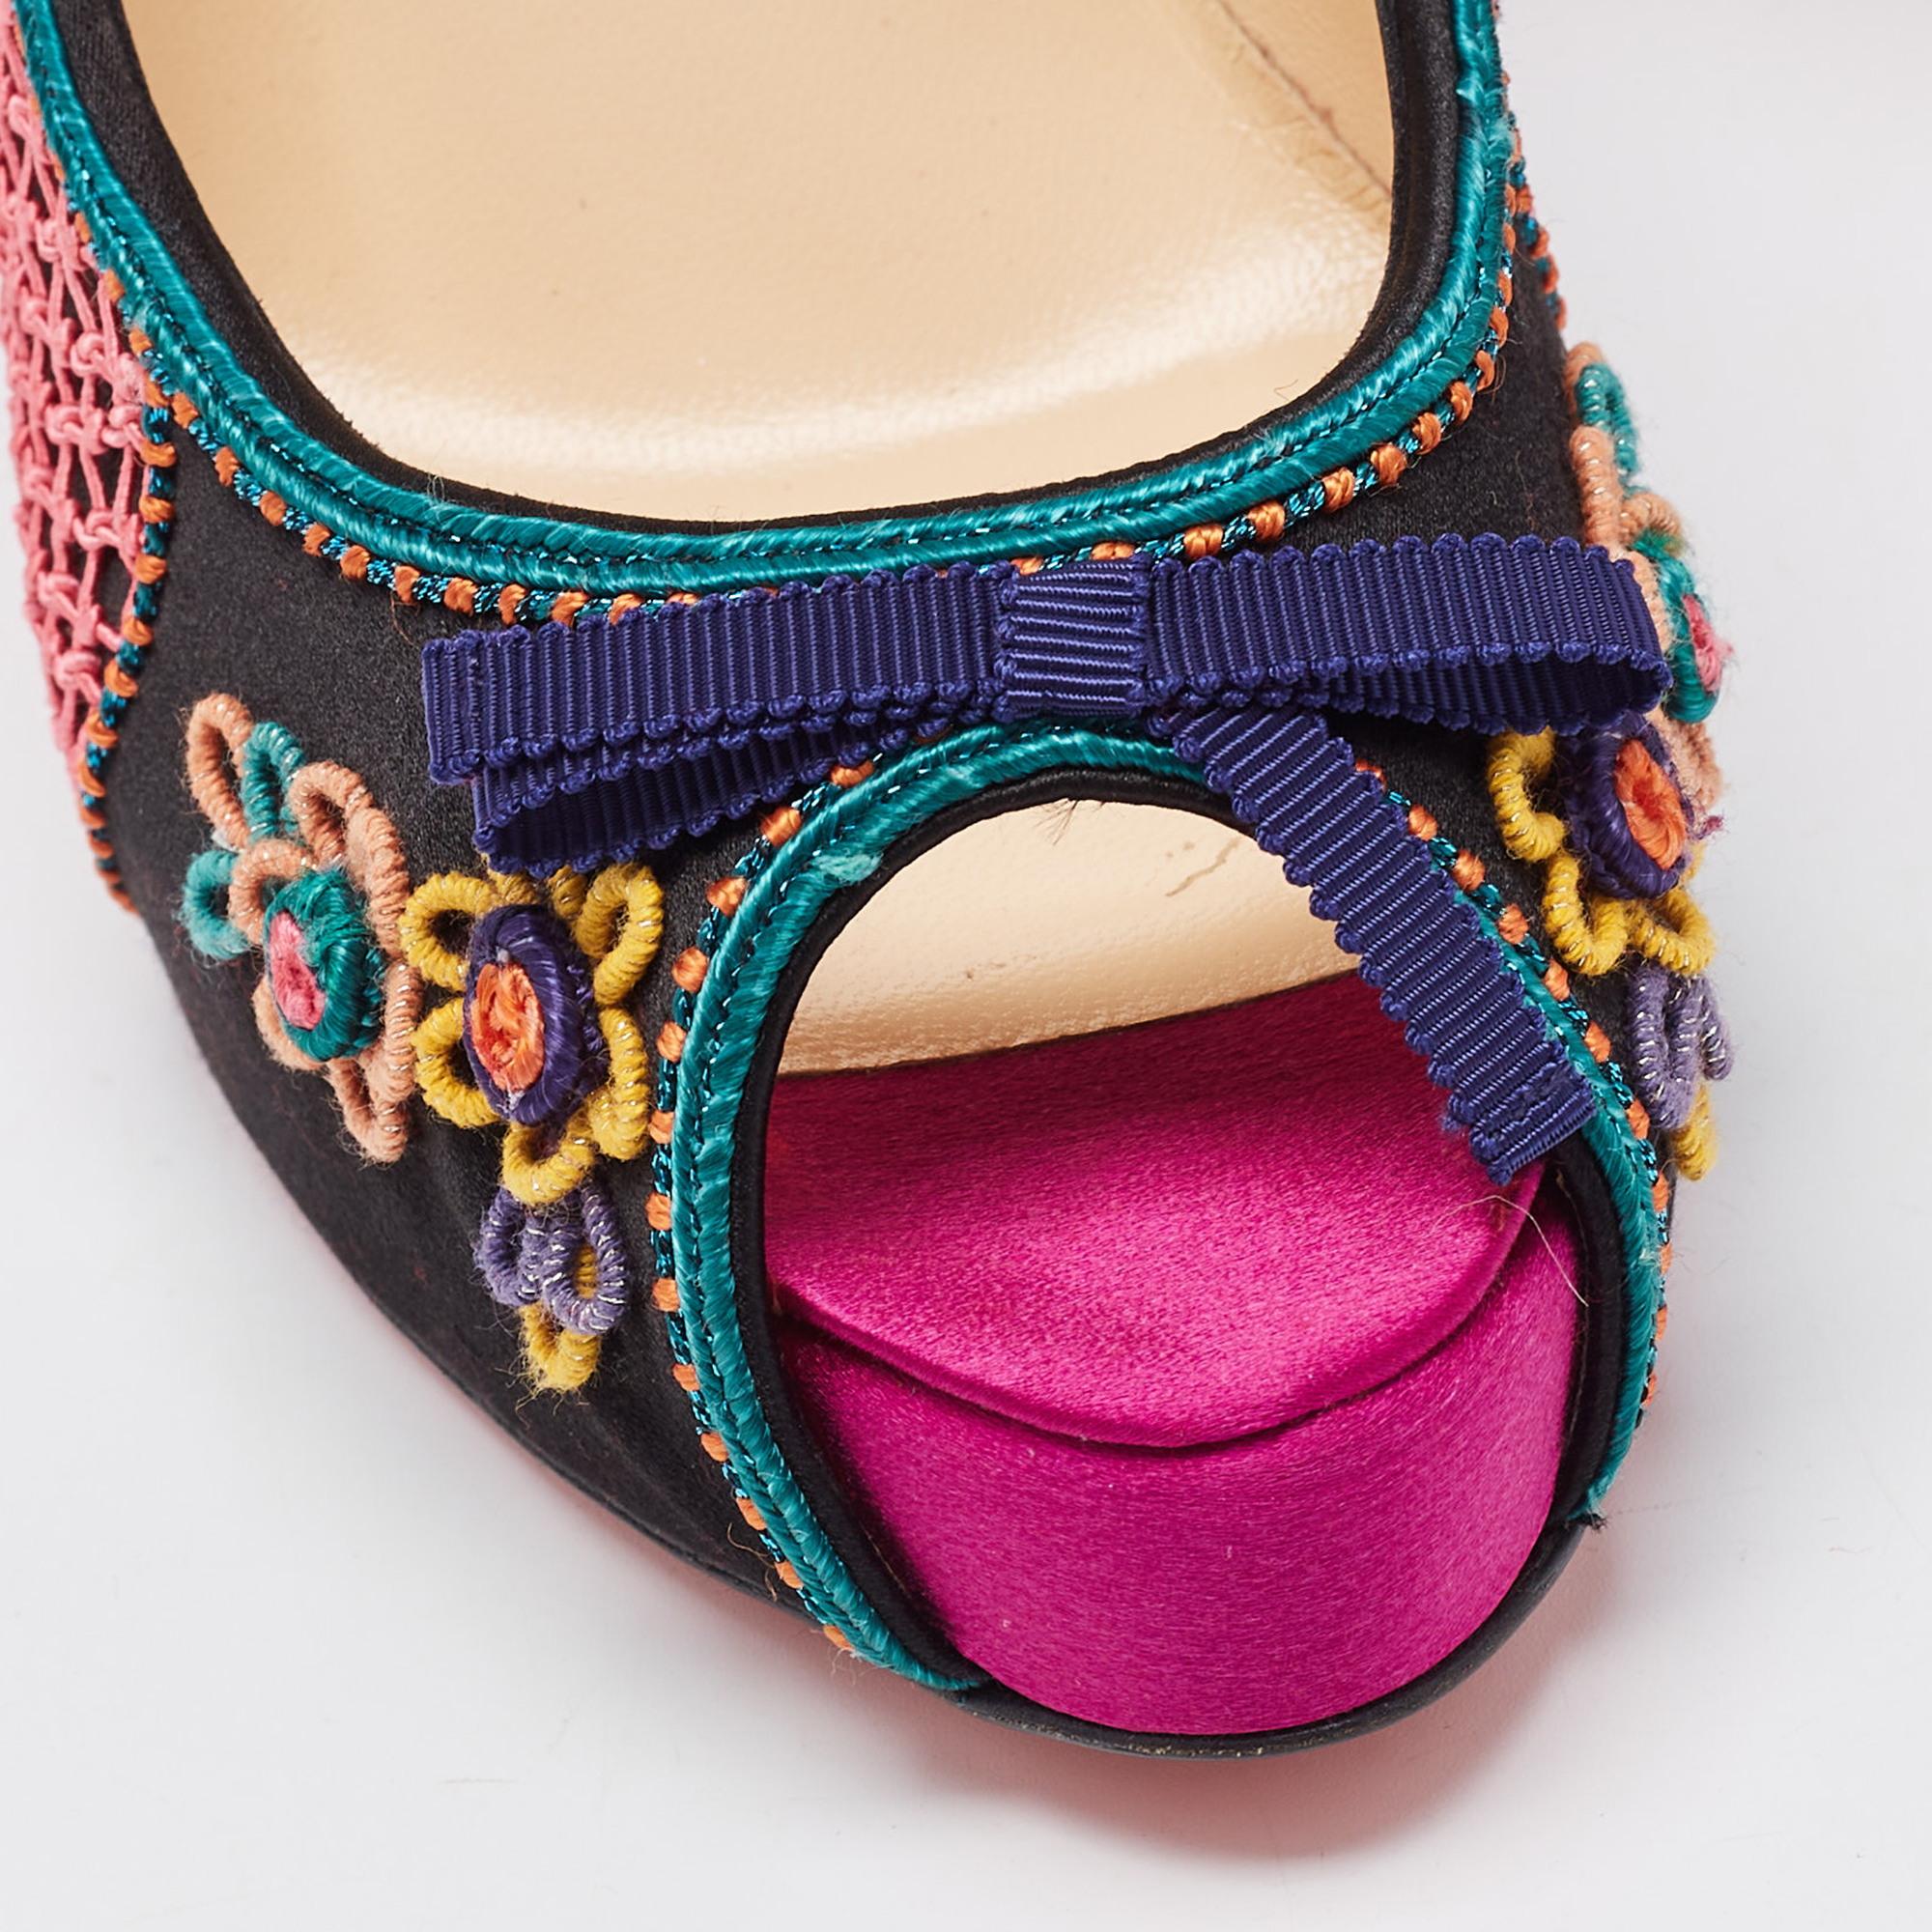 Christian Louboutin Multicolor Embellished Satin Bow Peep Toe Platform Pumps Size 40